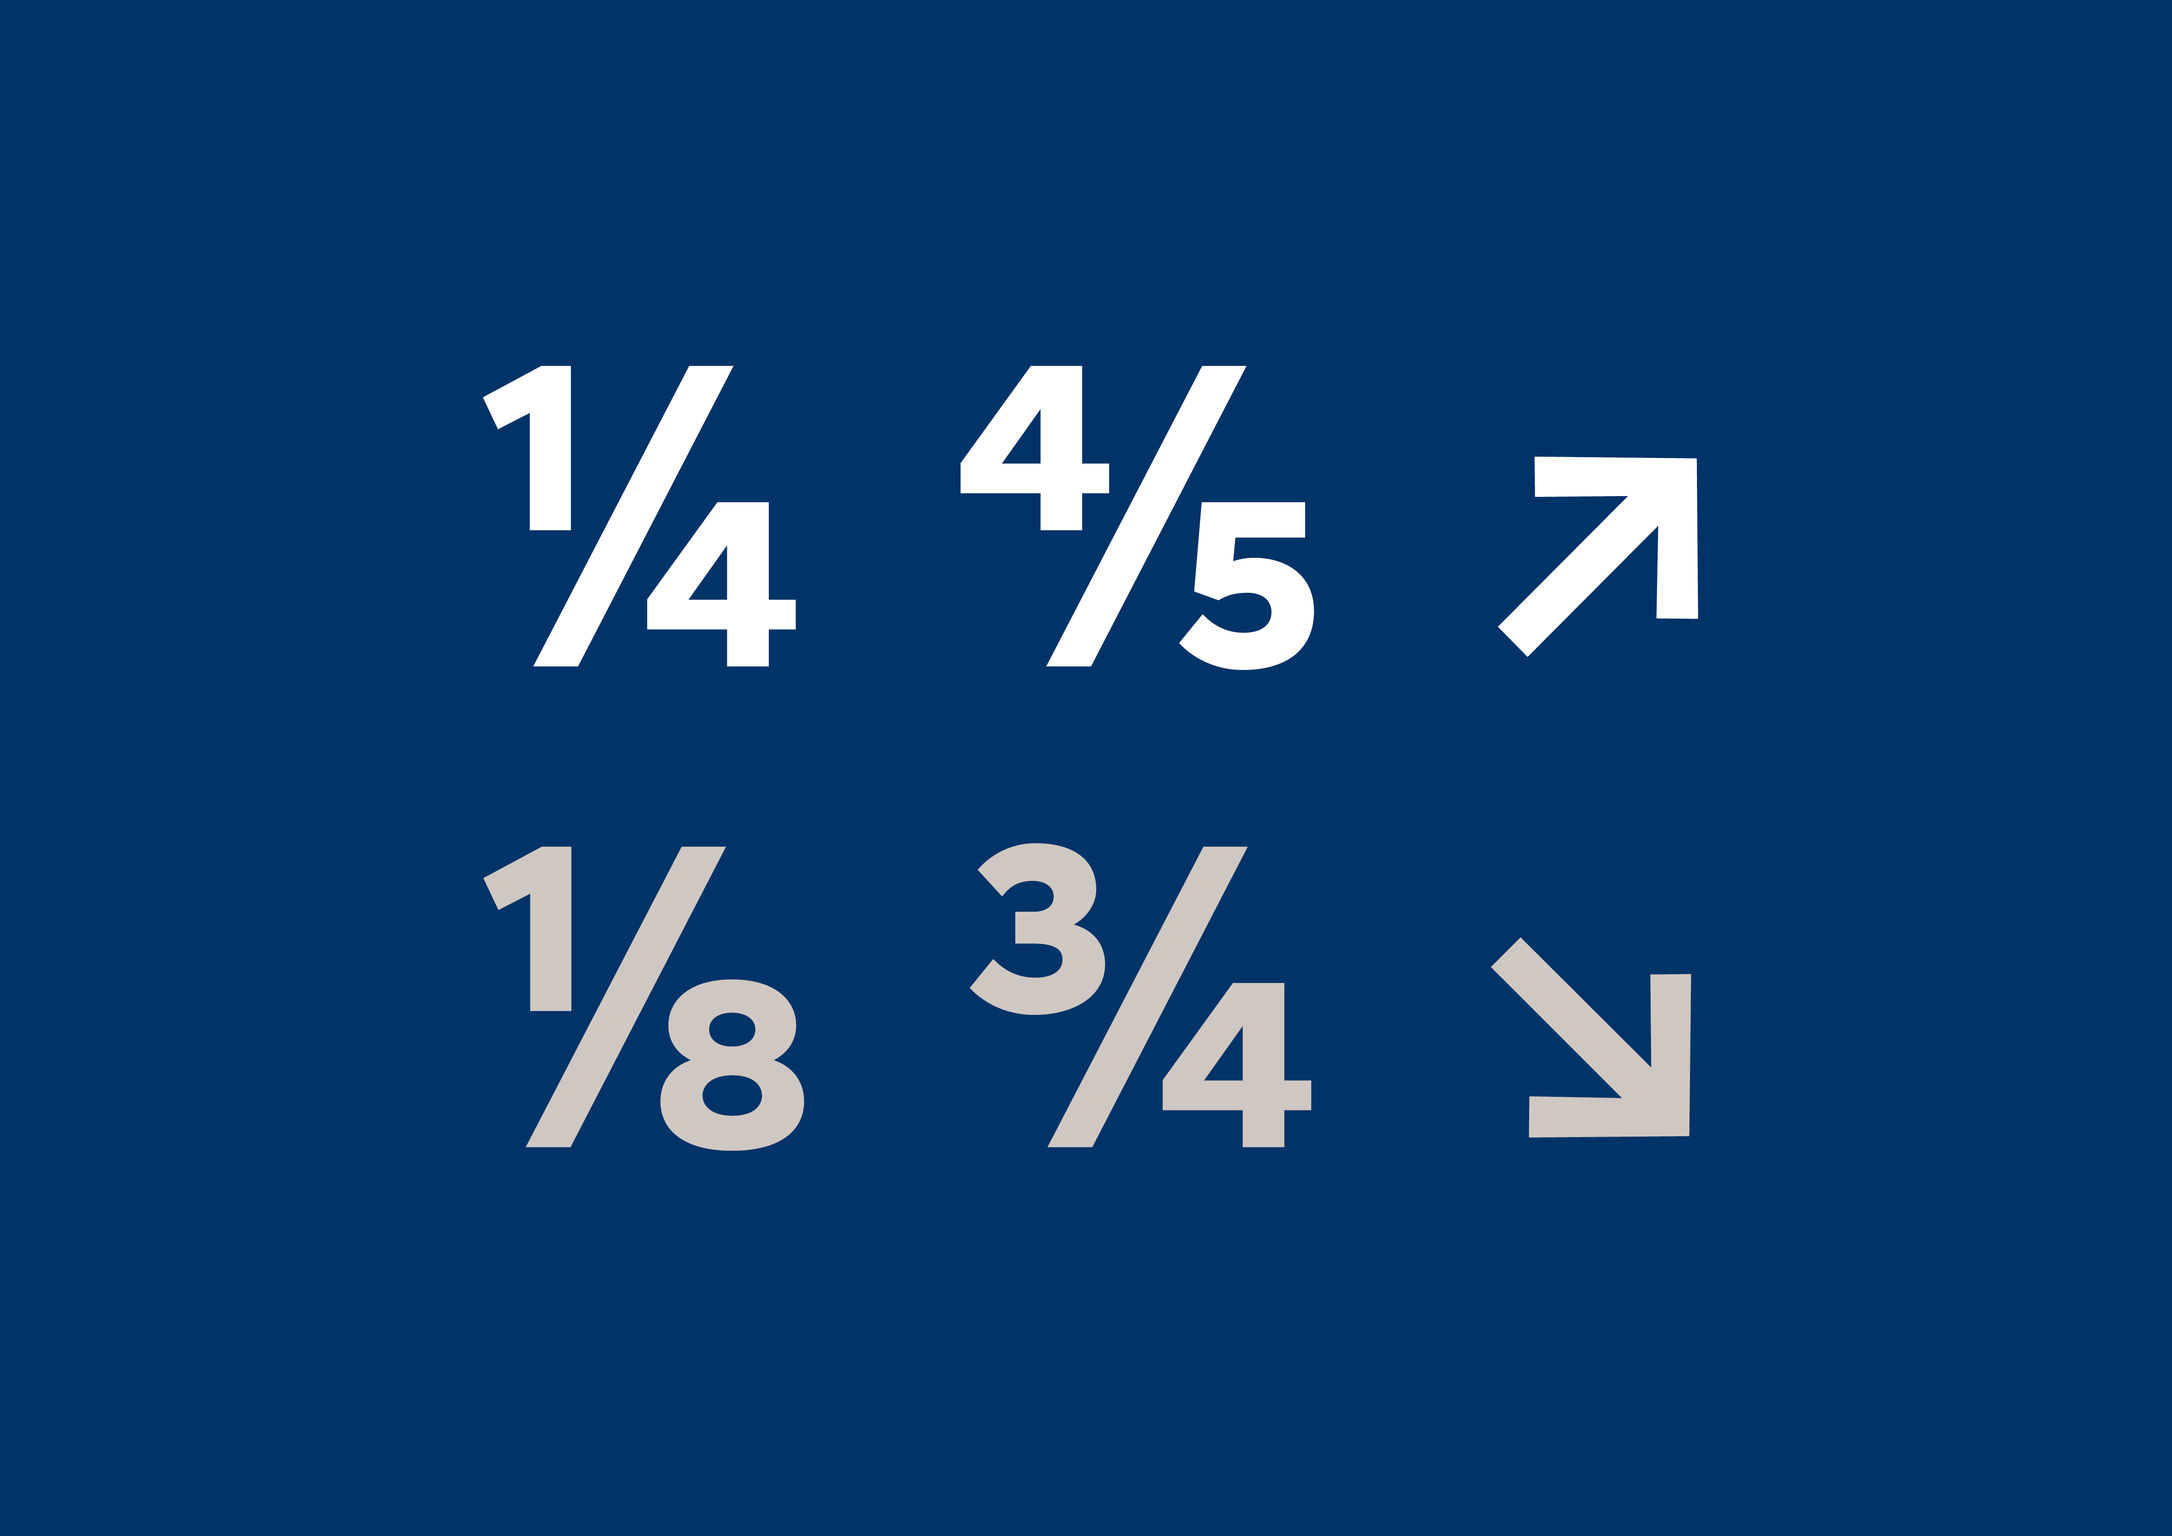 Hyundai Sans Typeface